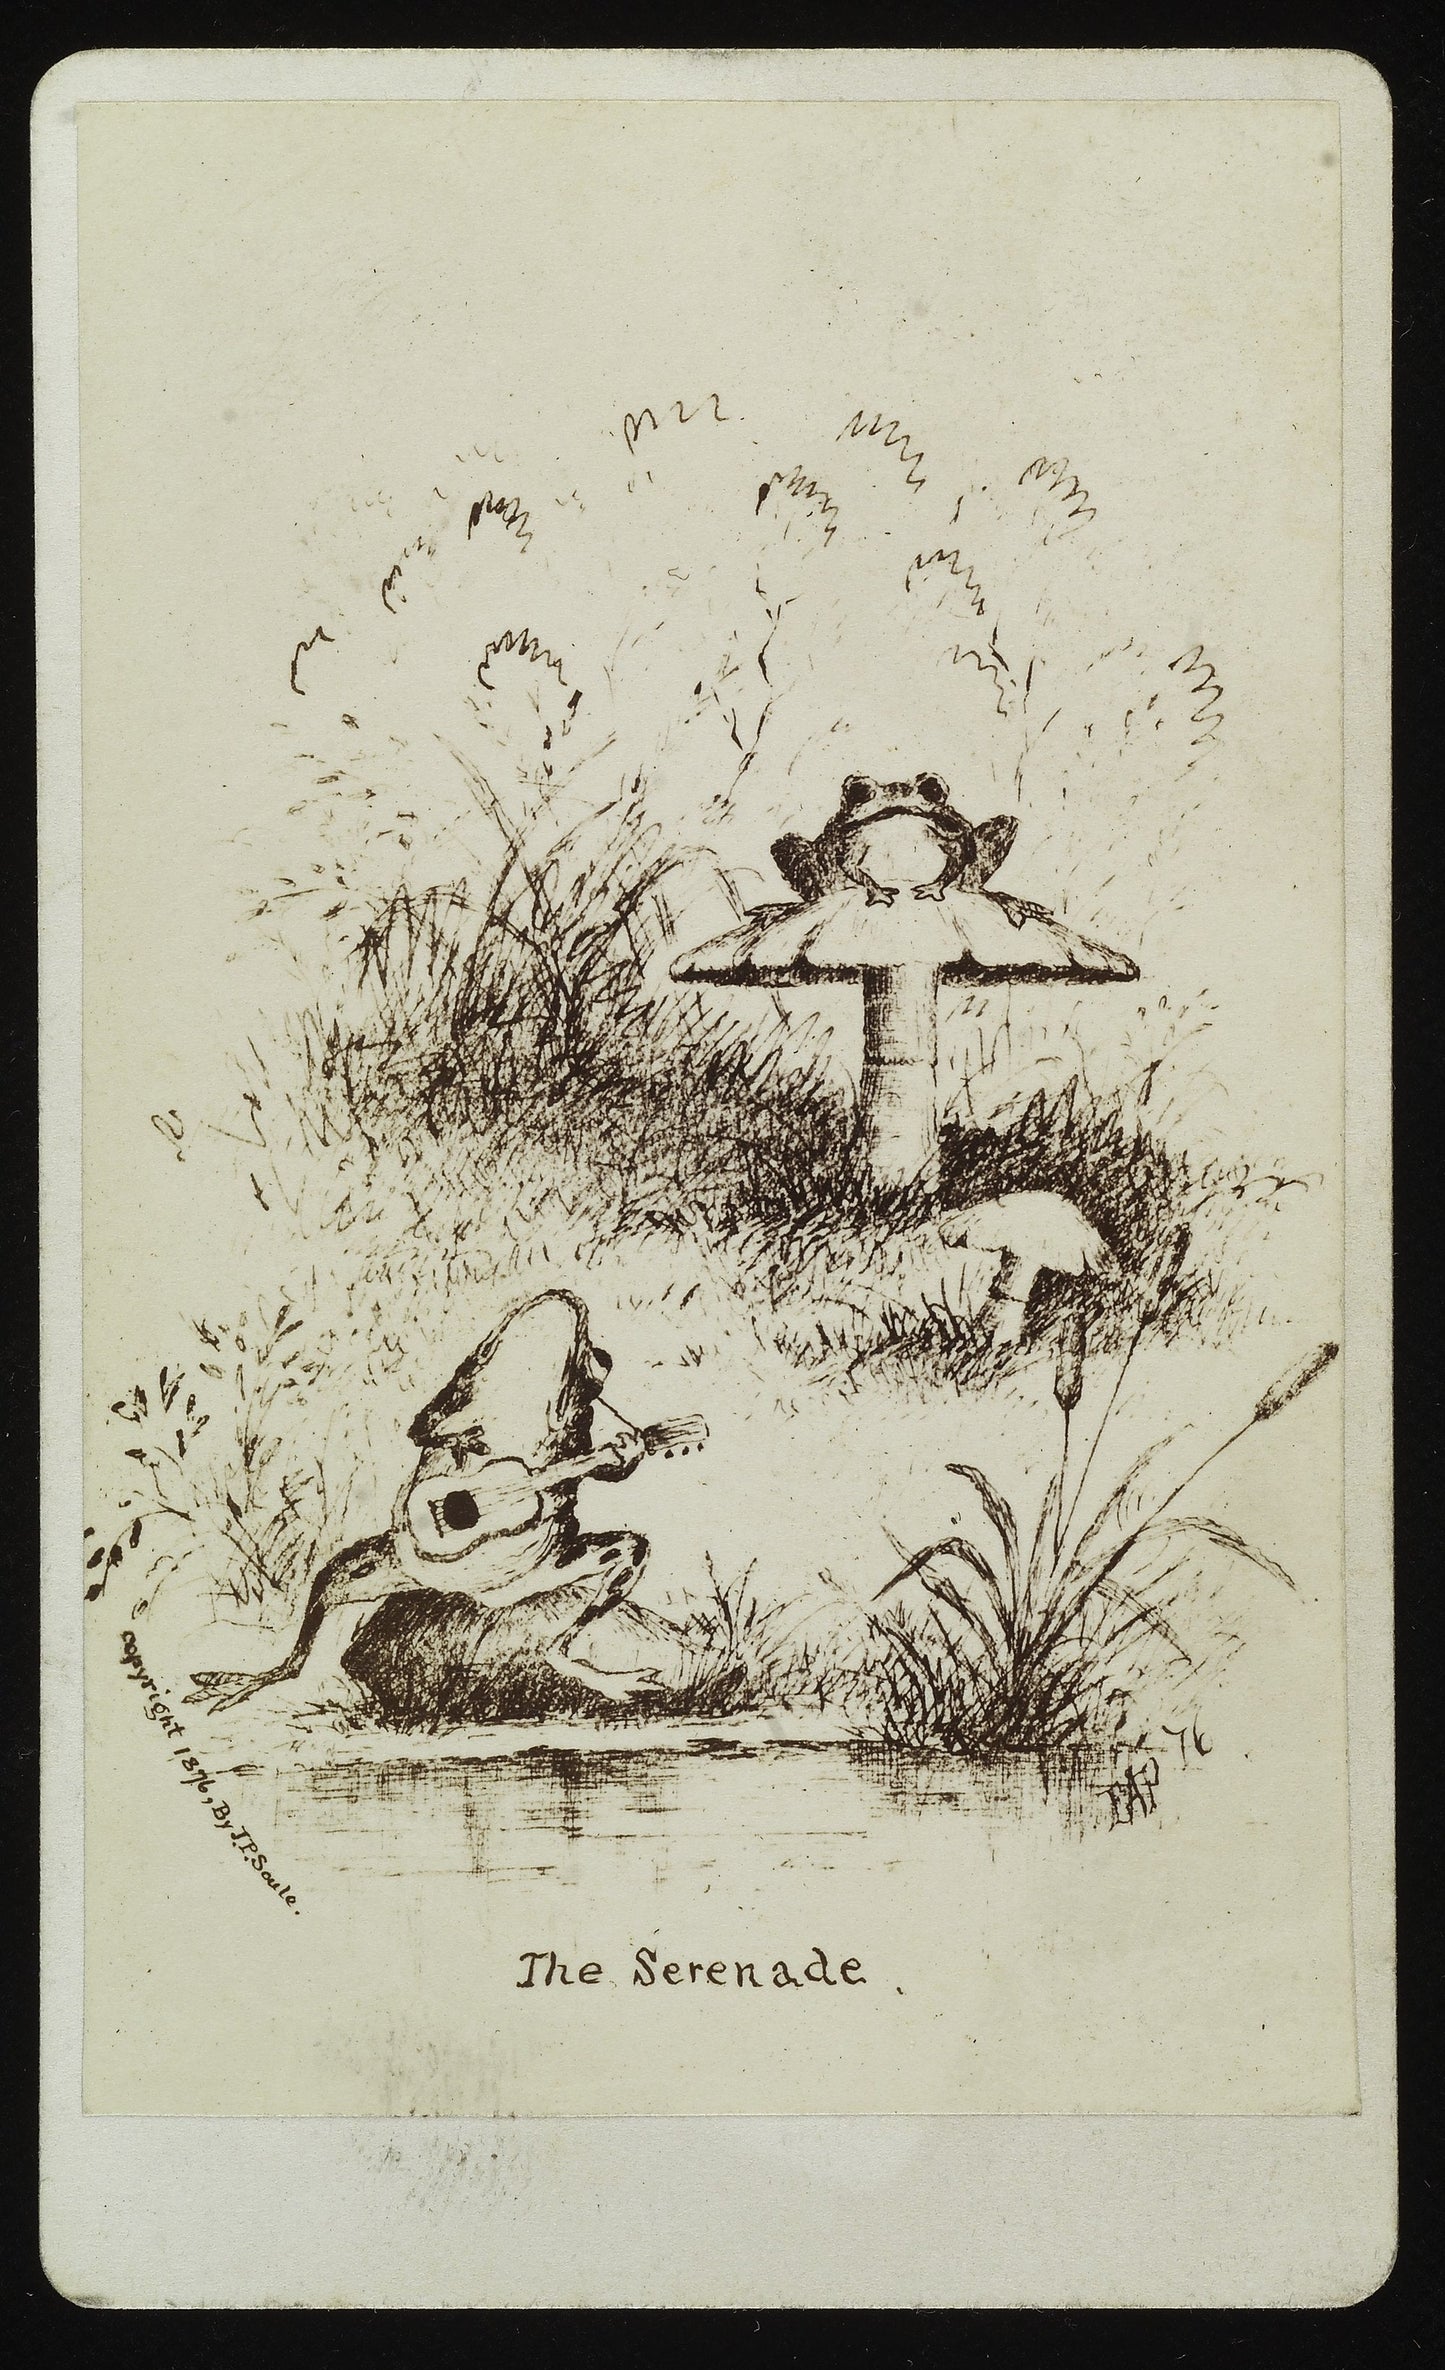 The Serenade frog art print (1876) | J. P. Soule  The Trumpet Shop   